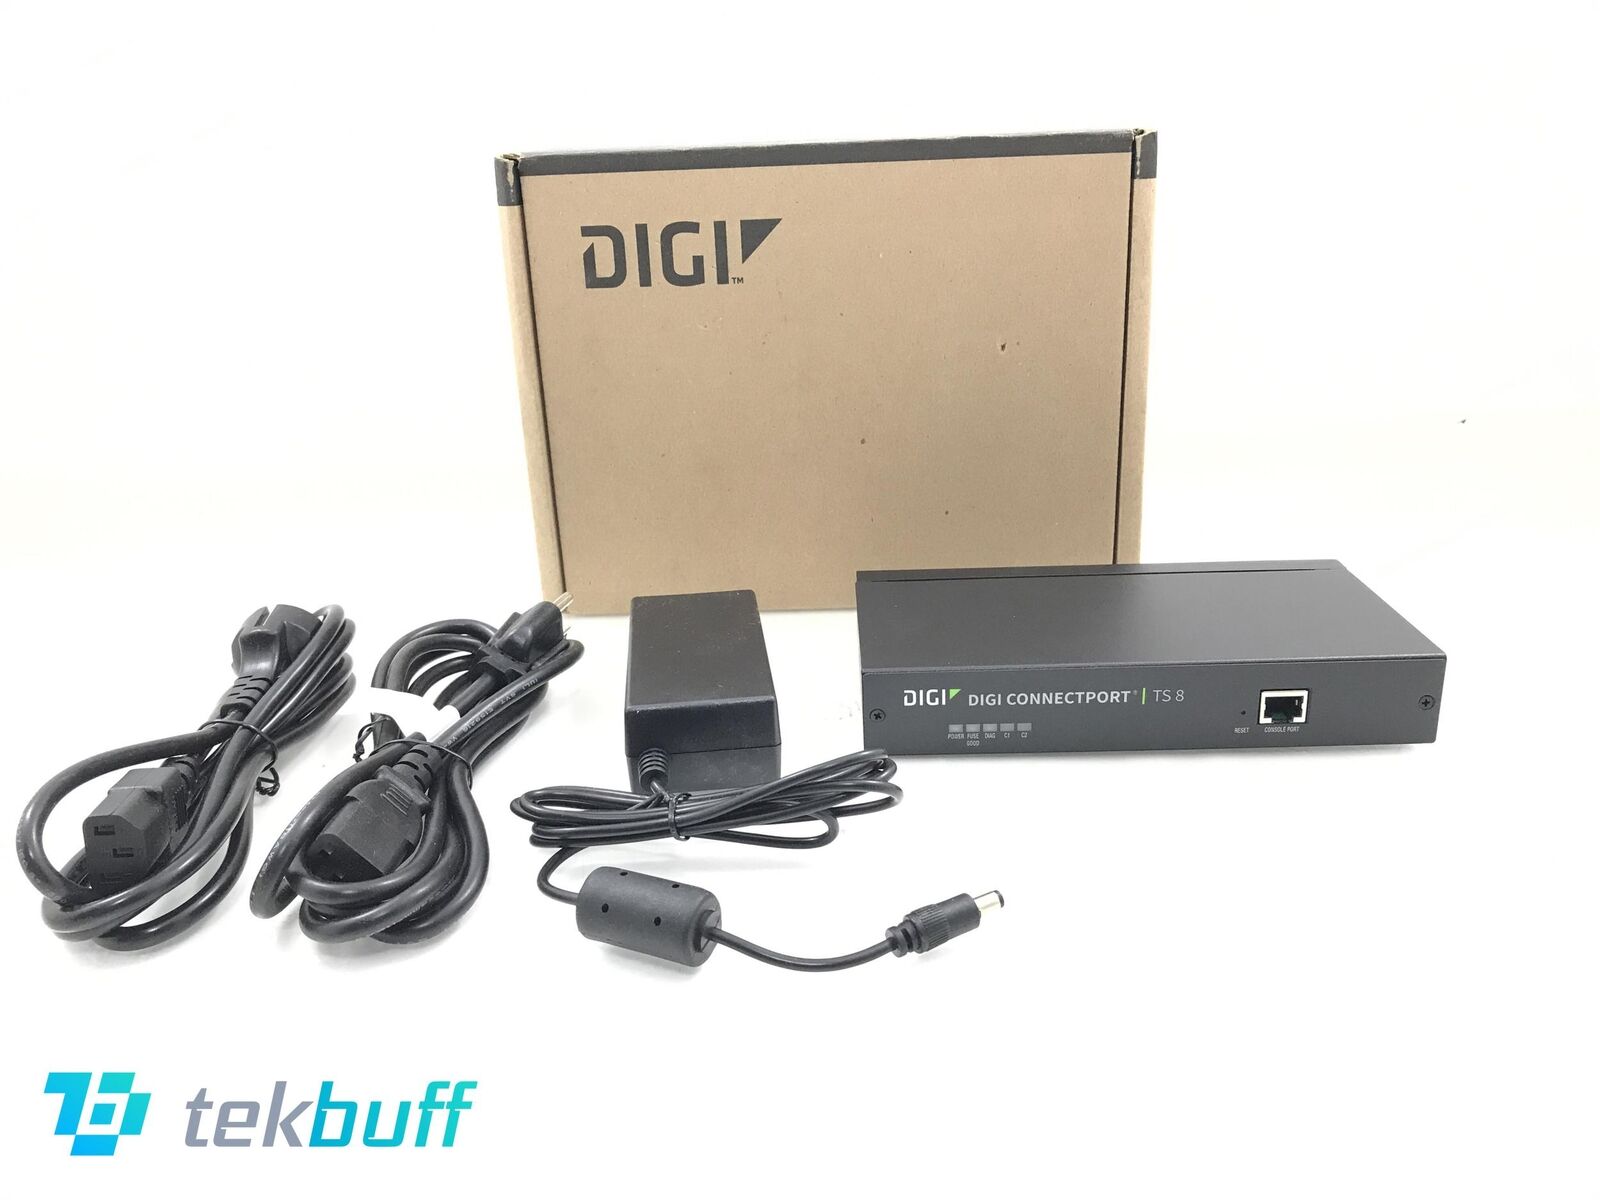 Digi ConnectPort TS8 70002323 Terminal Server - Ethernet to Serial